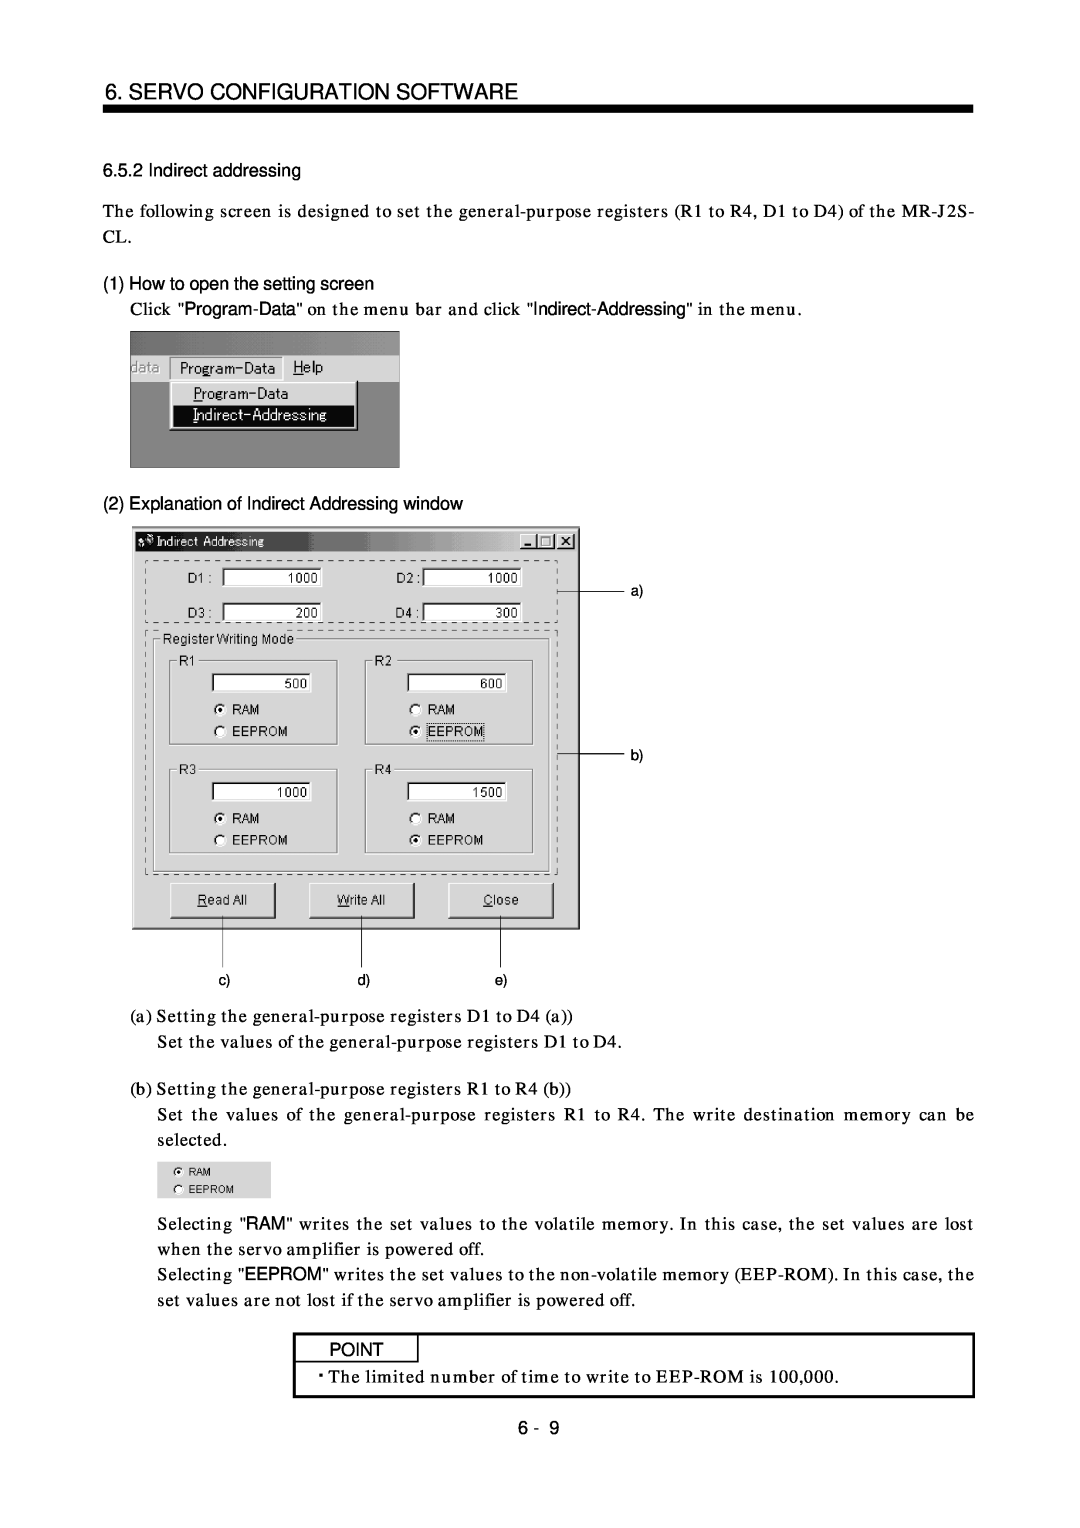 Mitsubishi Electronics MR-J2S- CL specifications Indirect addressing, Explanation of Indirect Addressing window, Point 